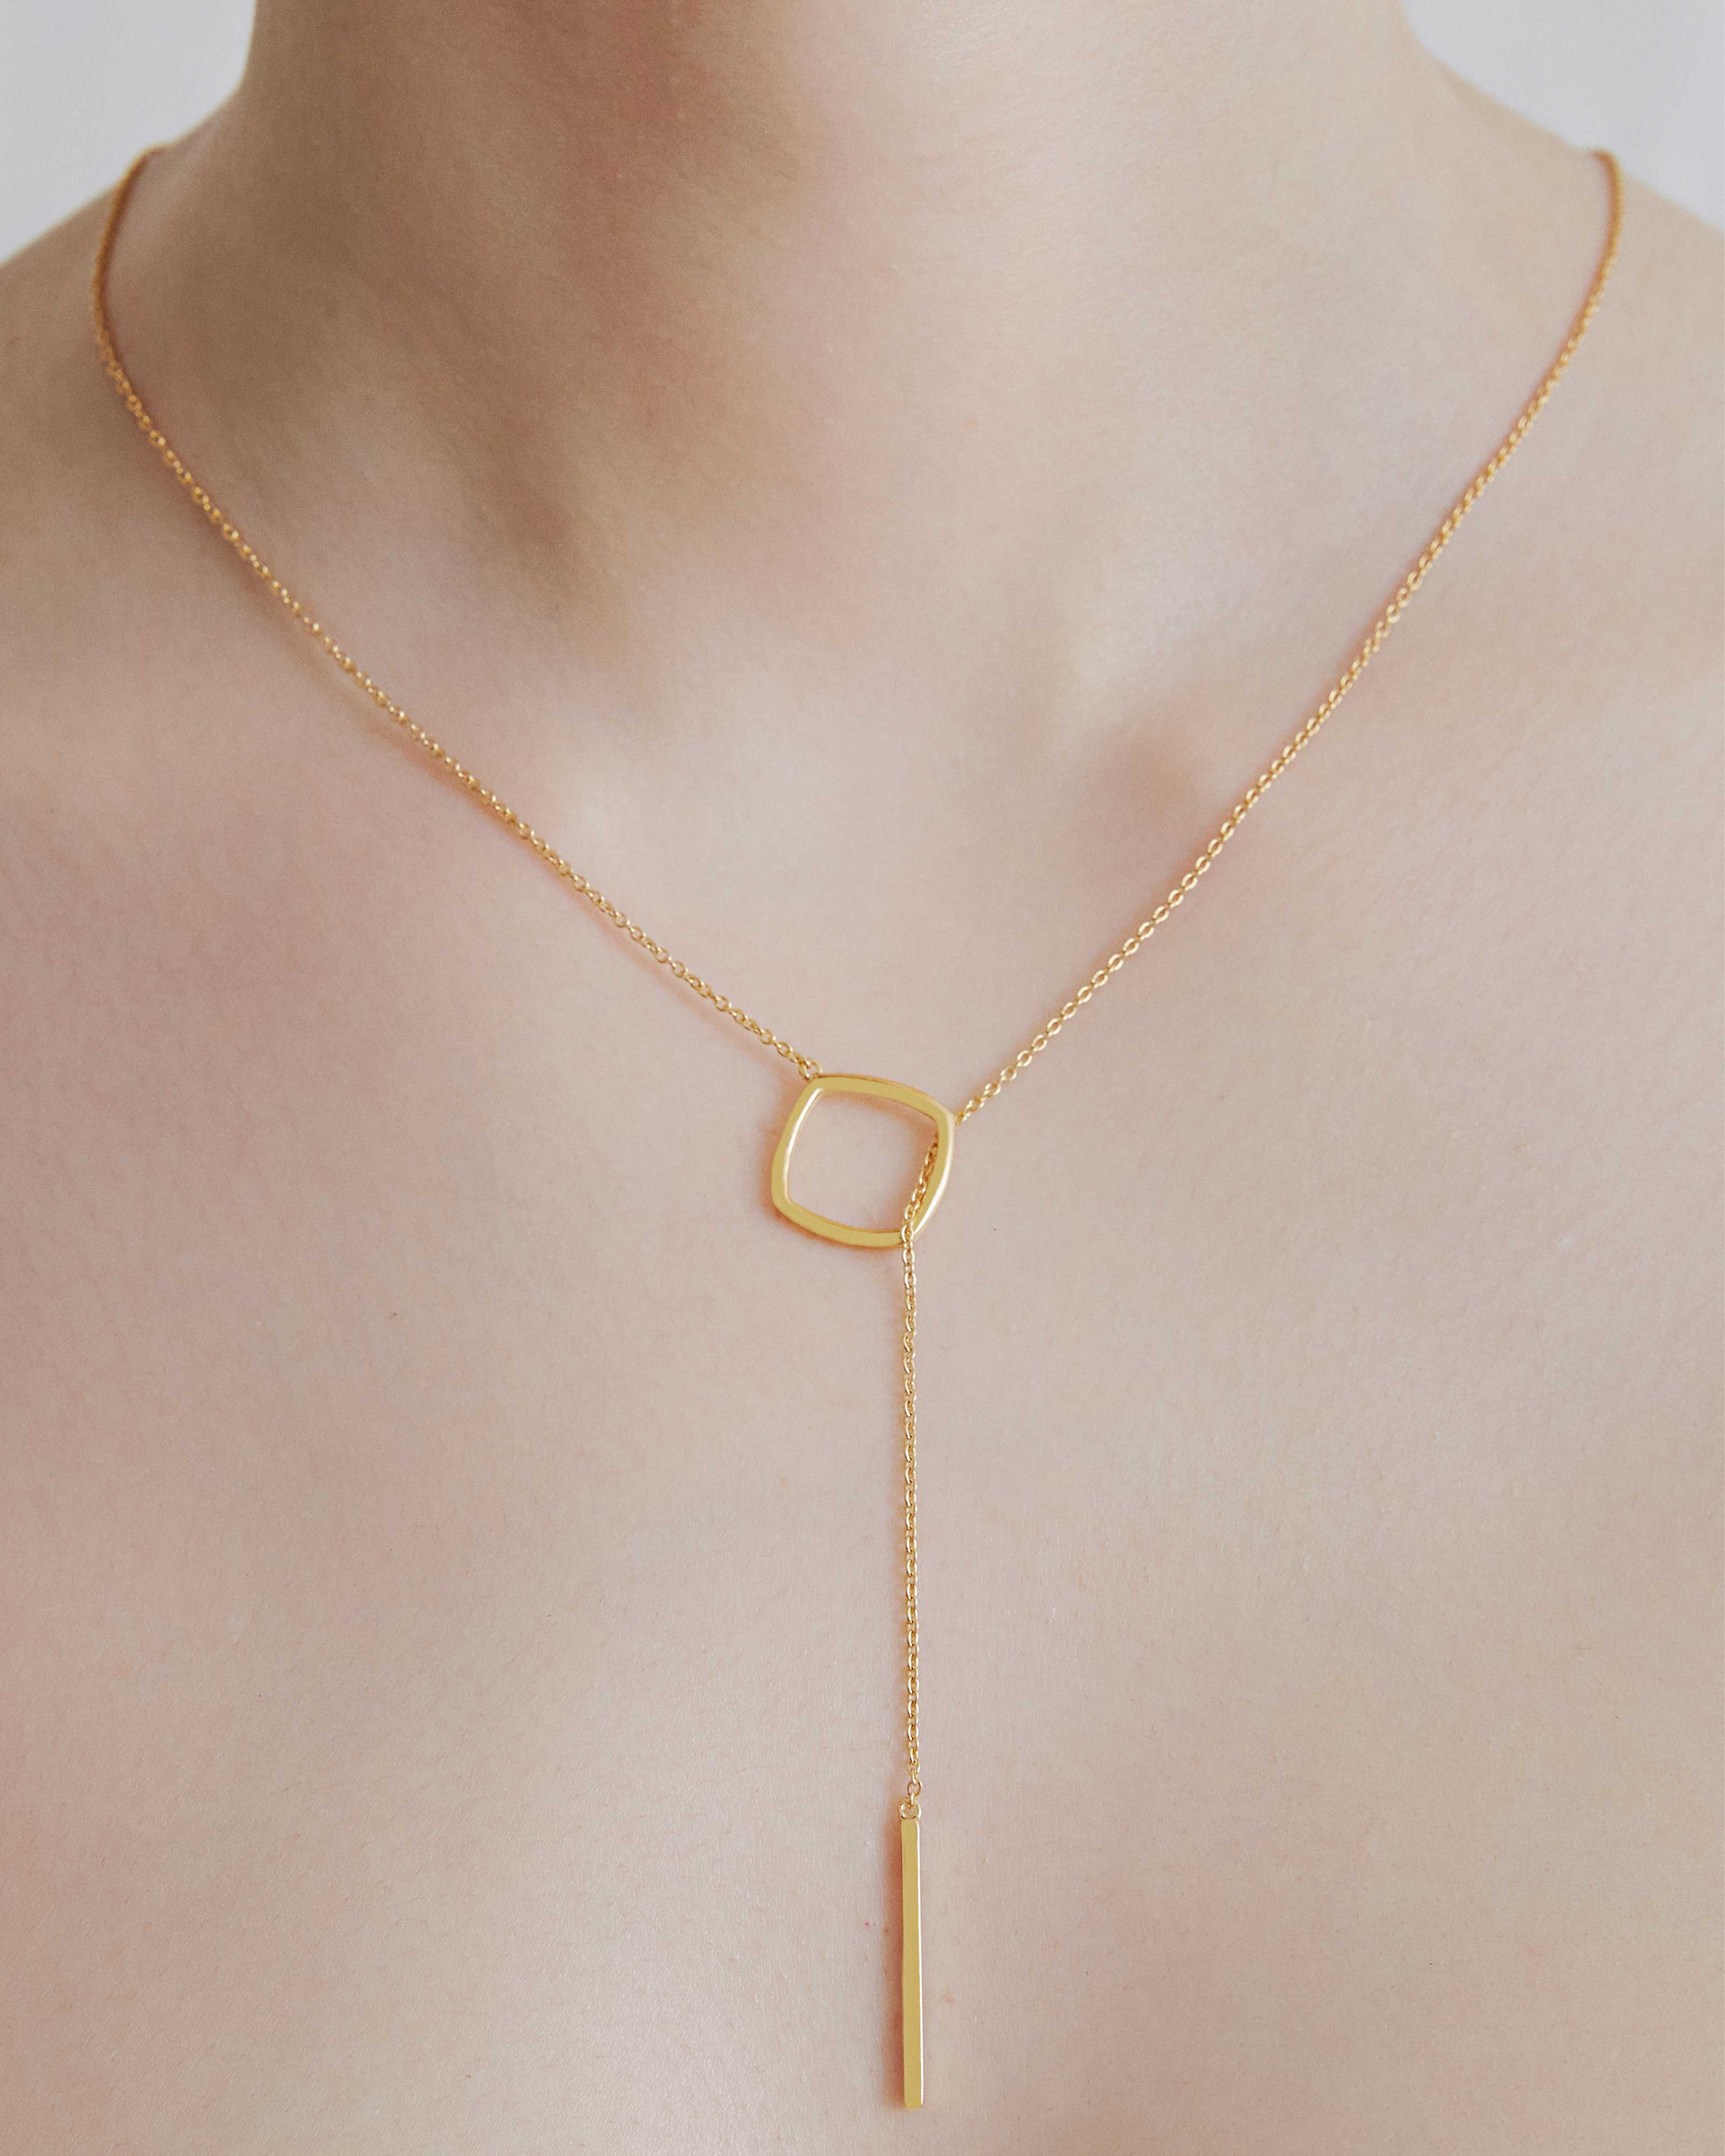      sener-besim-accent-y-necklace-gold